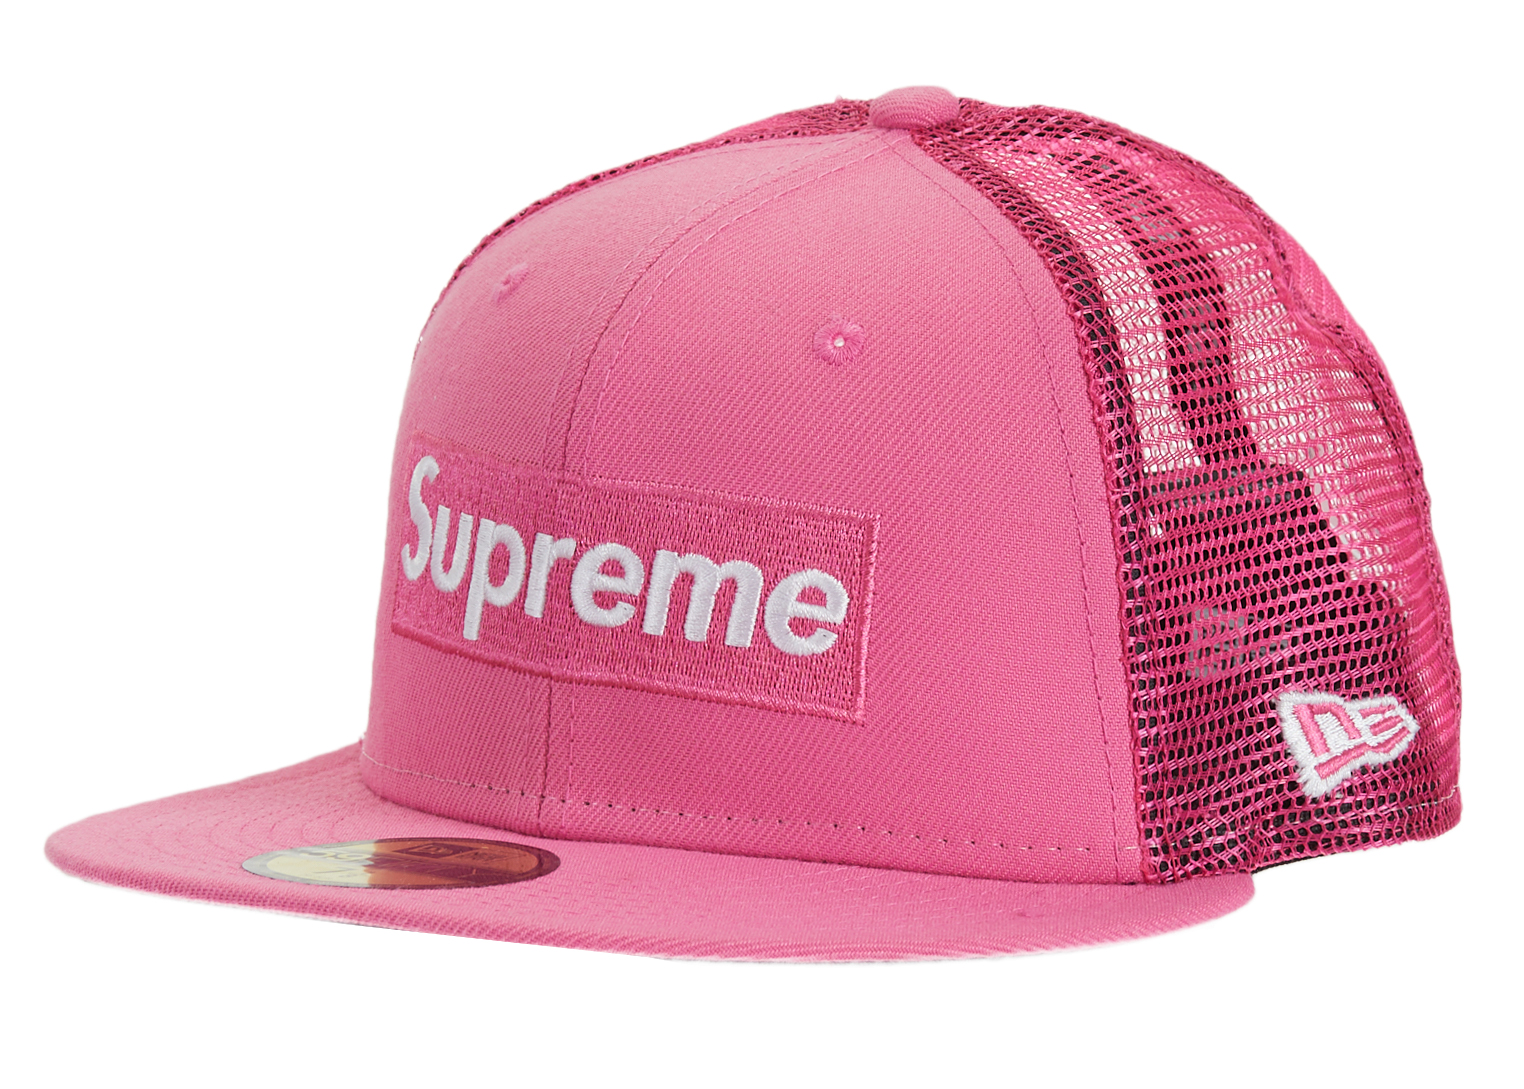 Supreme Box Logo Mesh Back New Era Pink